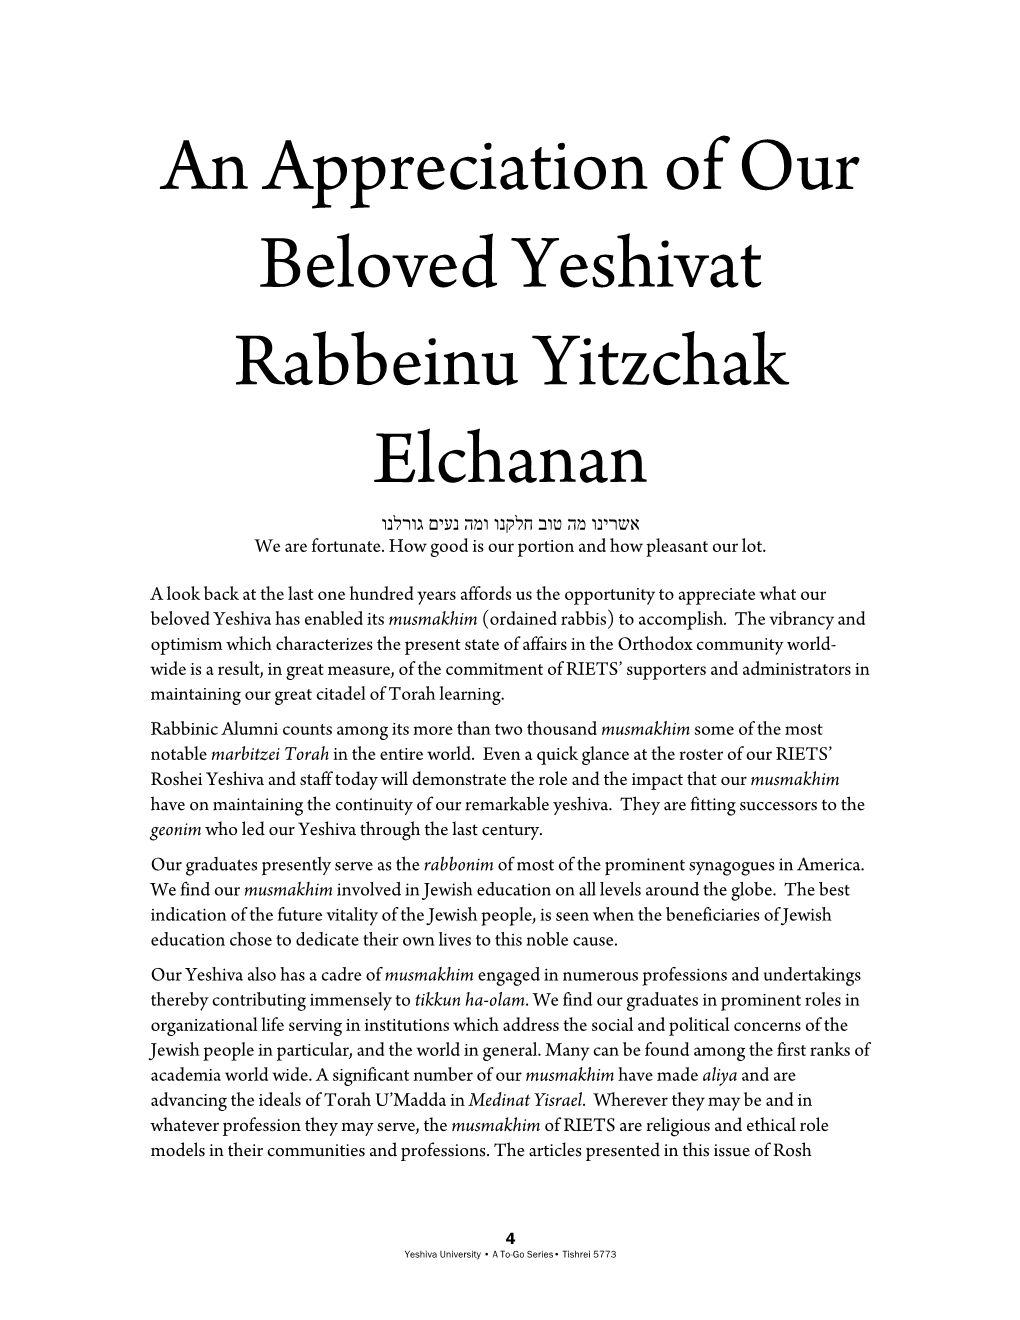 An Appreciation of Our Beloved Yeshivat Rabbeinu Yitzchak Elchanan אשרינו מה טוב חלקנו ומה נעים גורלנו We Are Fortunate